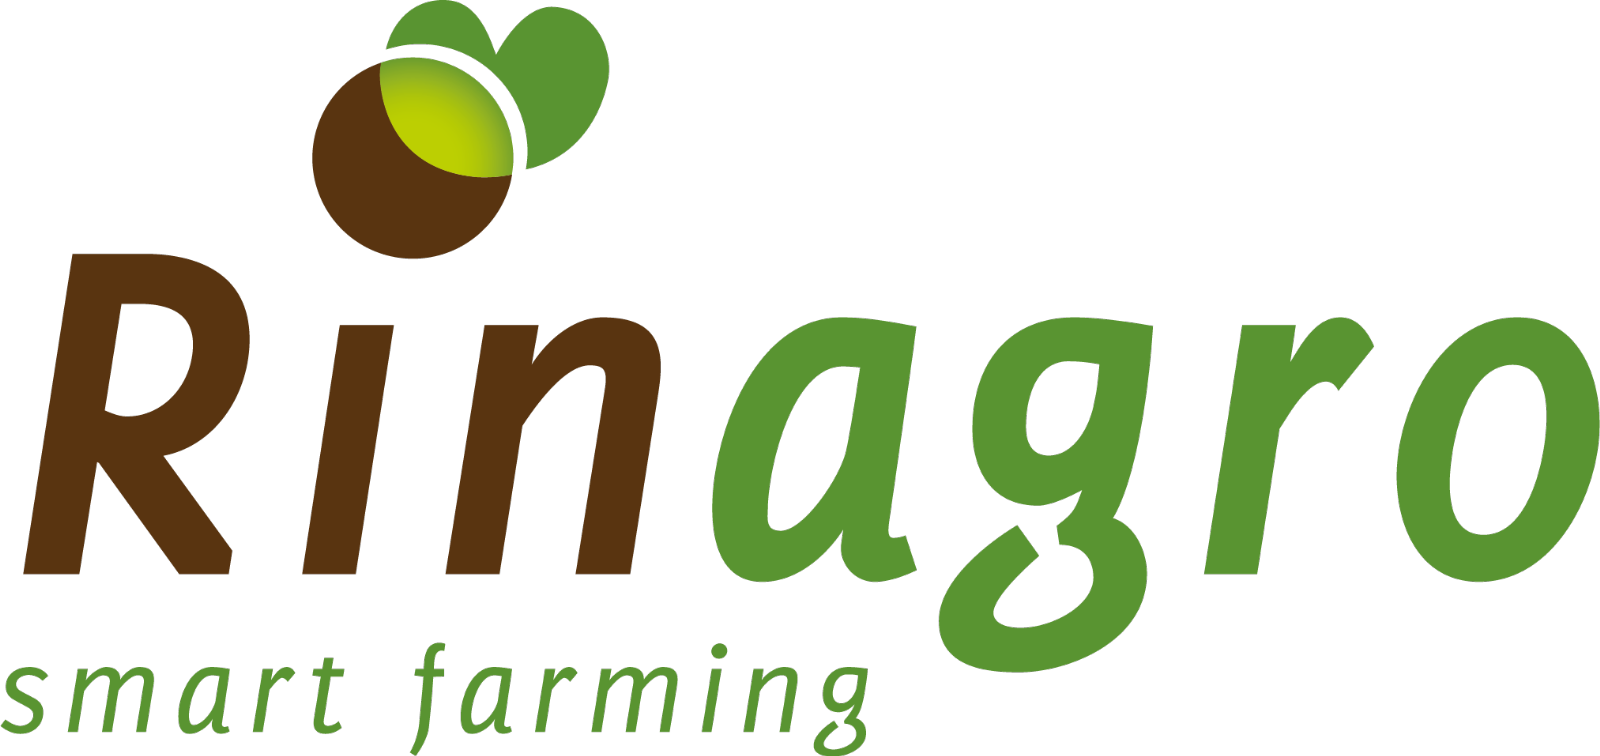 Rinagro logo